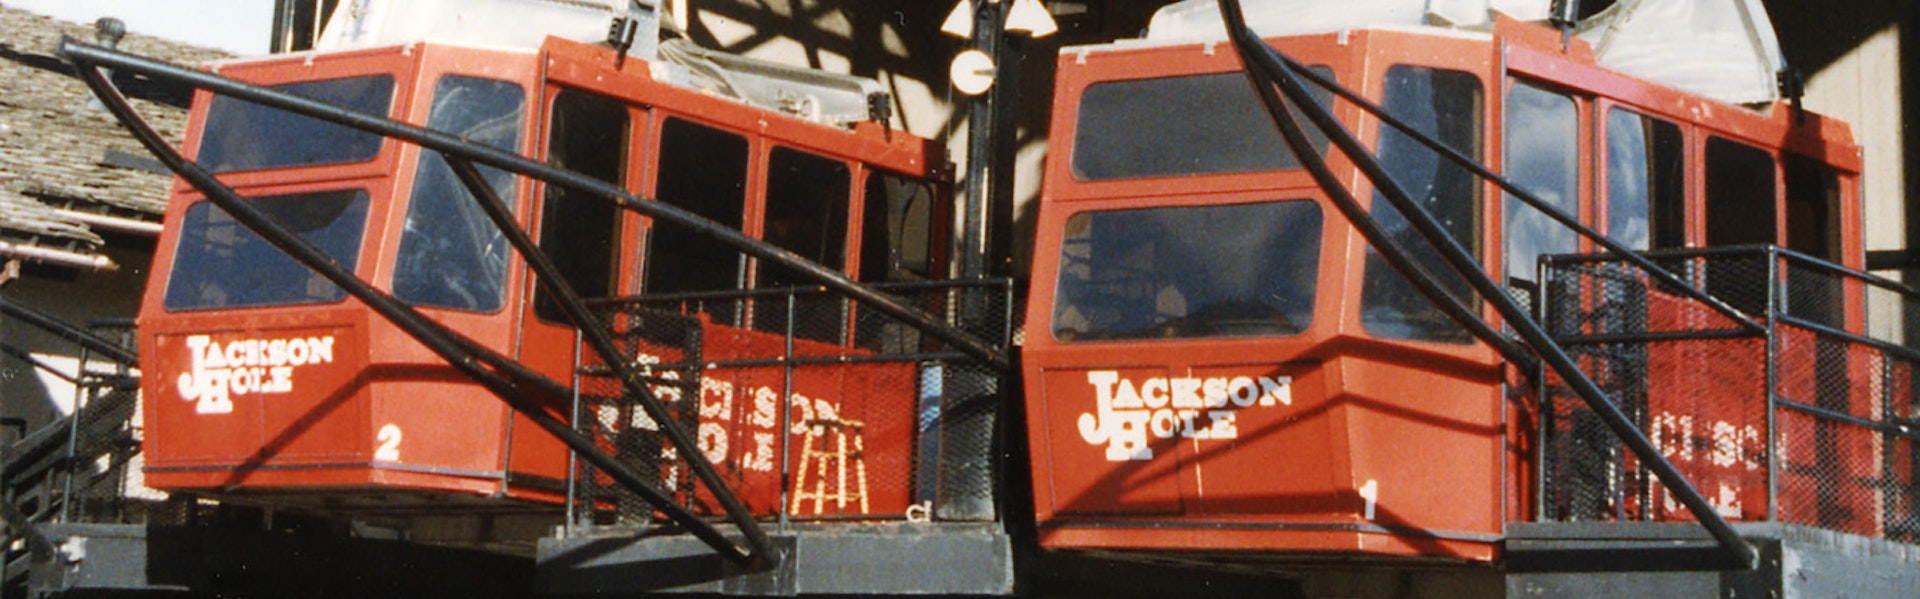 Original Tram cars sitting in base dock